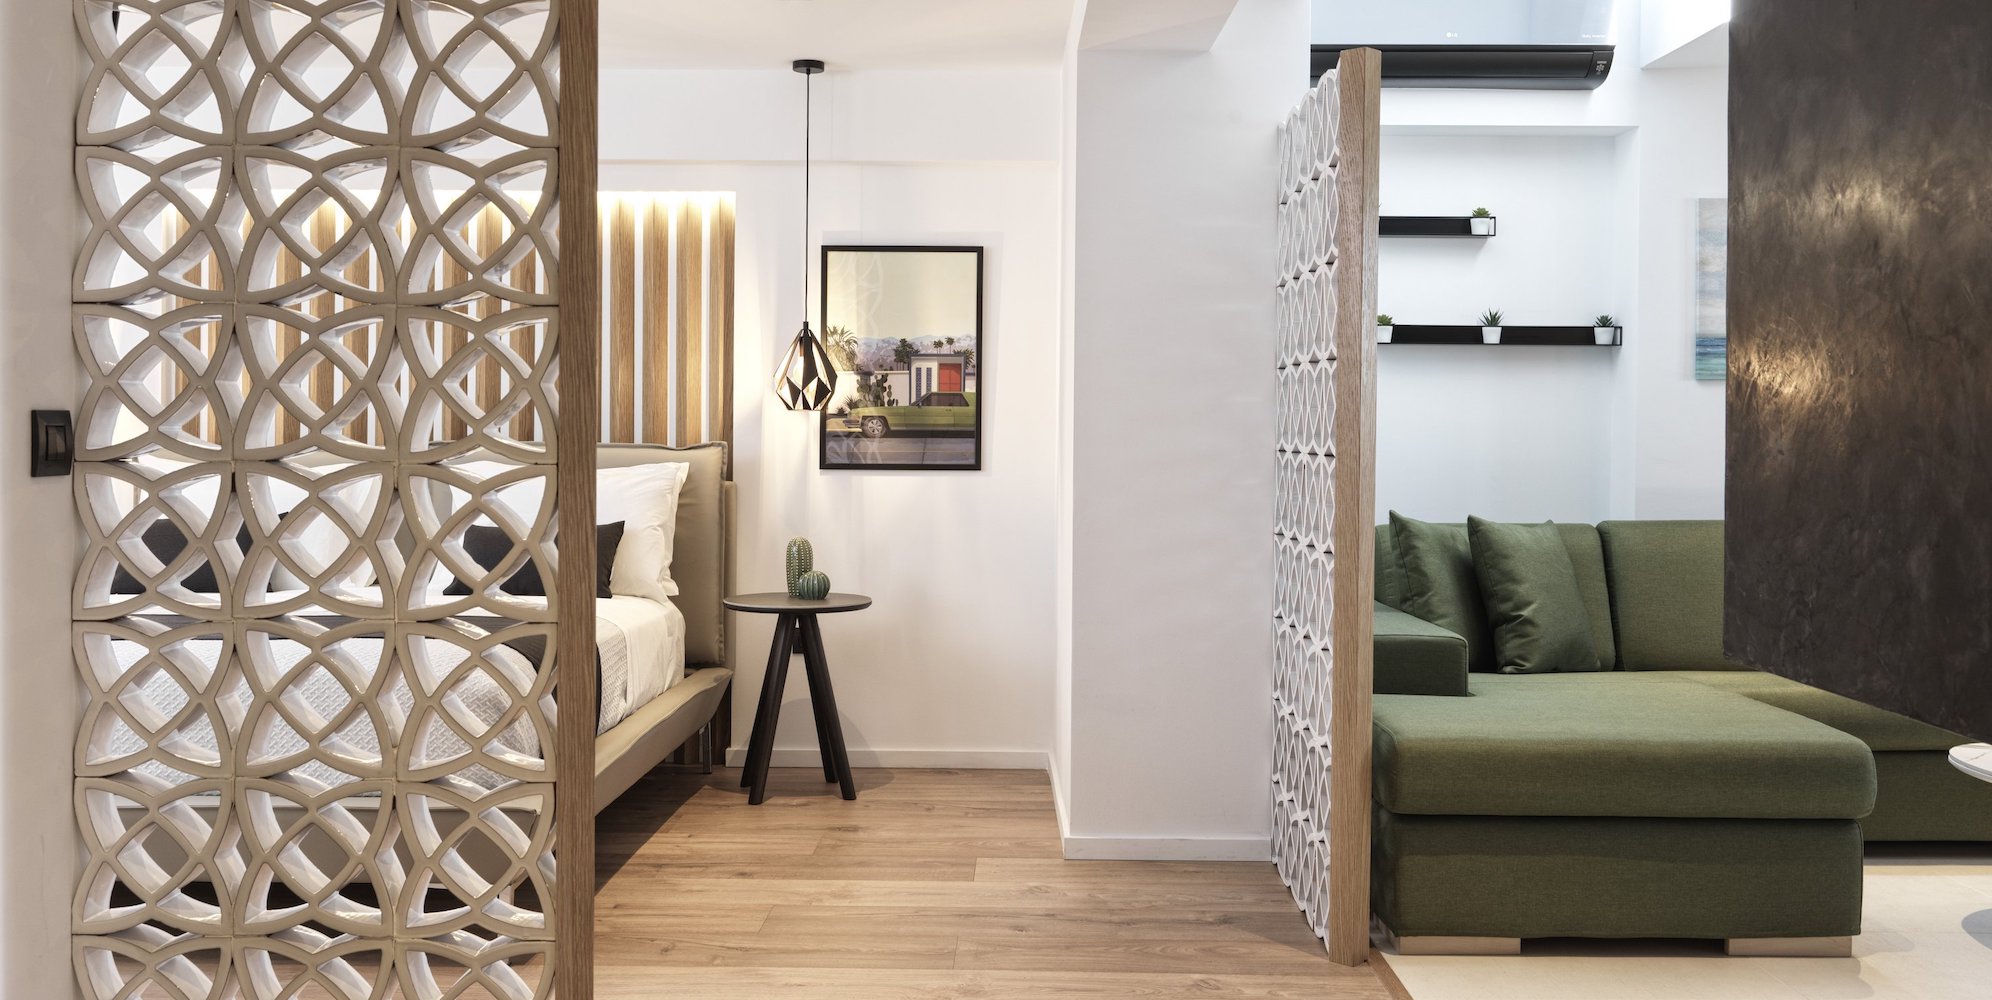 best hotels in athens: Kolonaki 8 room studio details